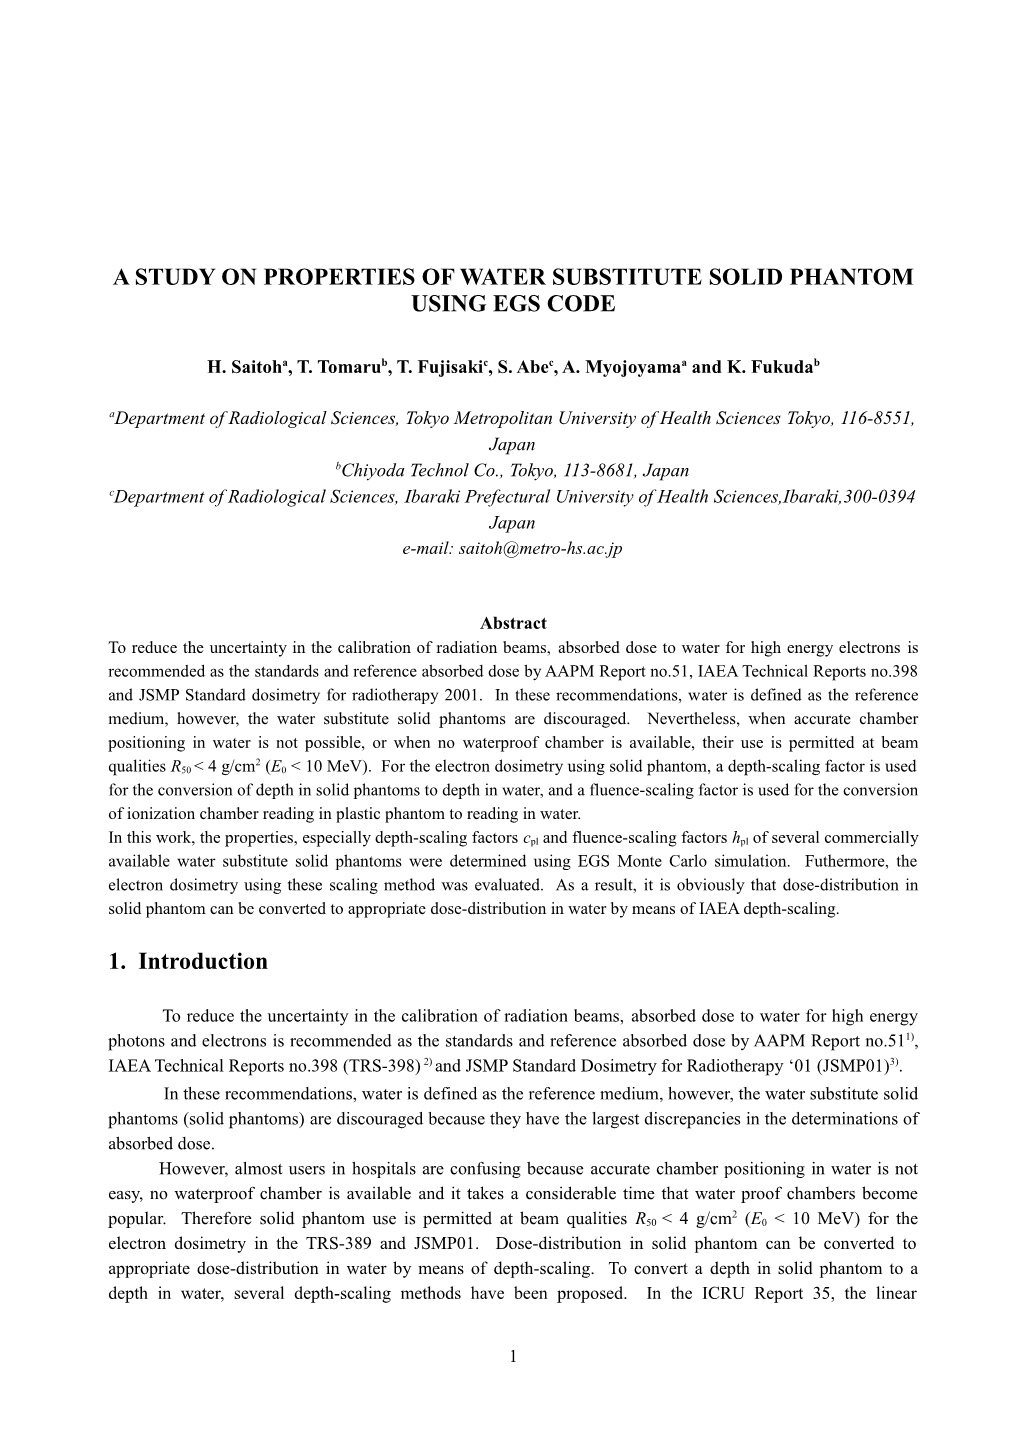 Properties of Water Substitute Solid Phantoms